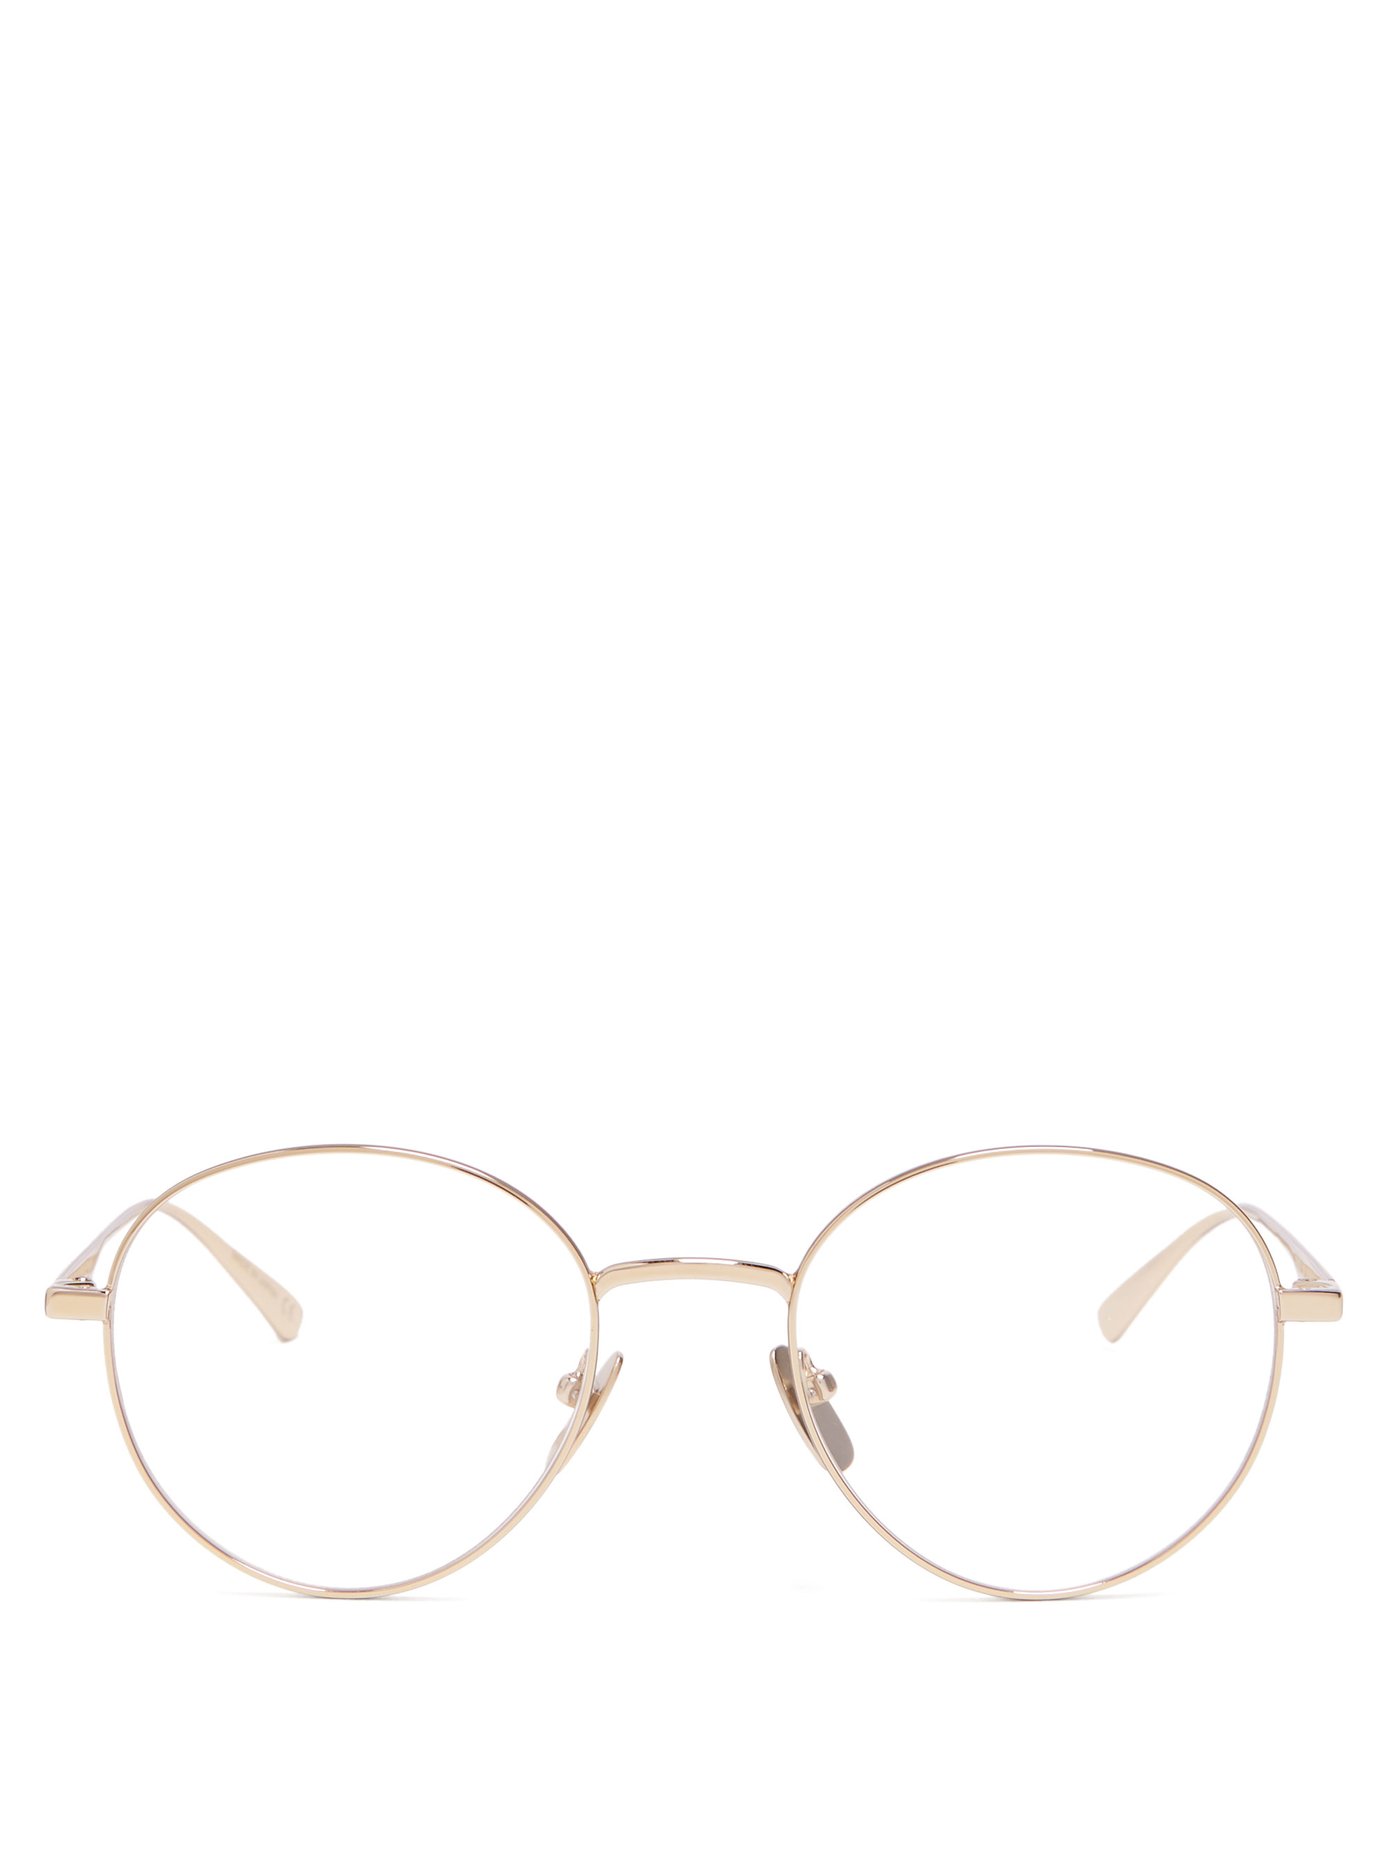 gucci glasses frames round